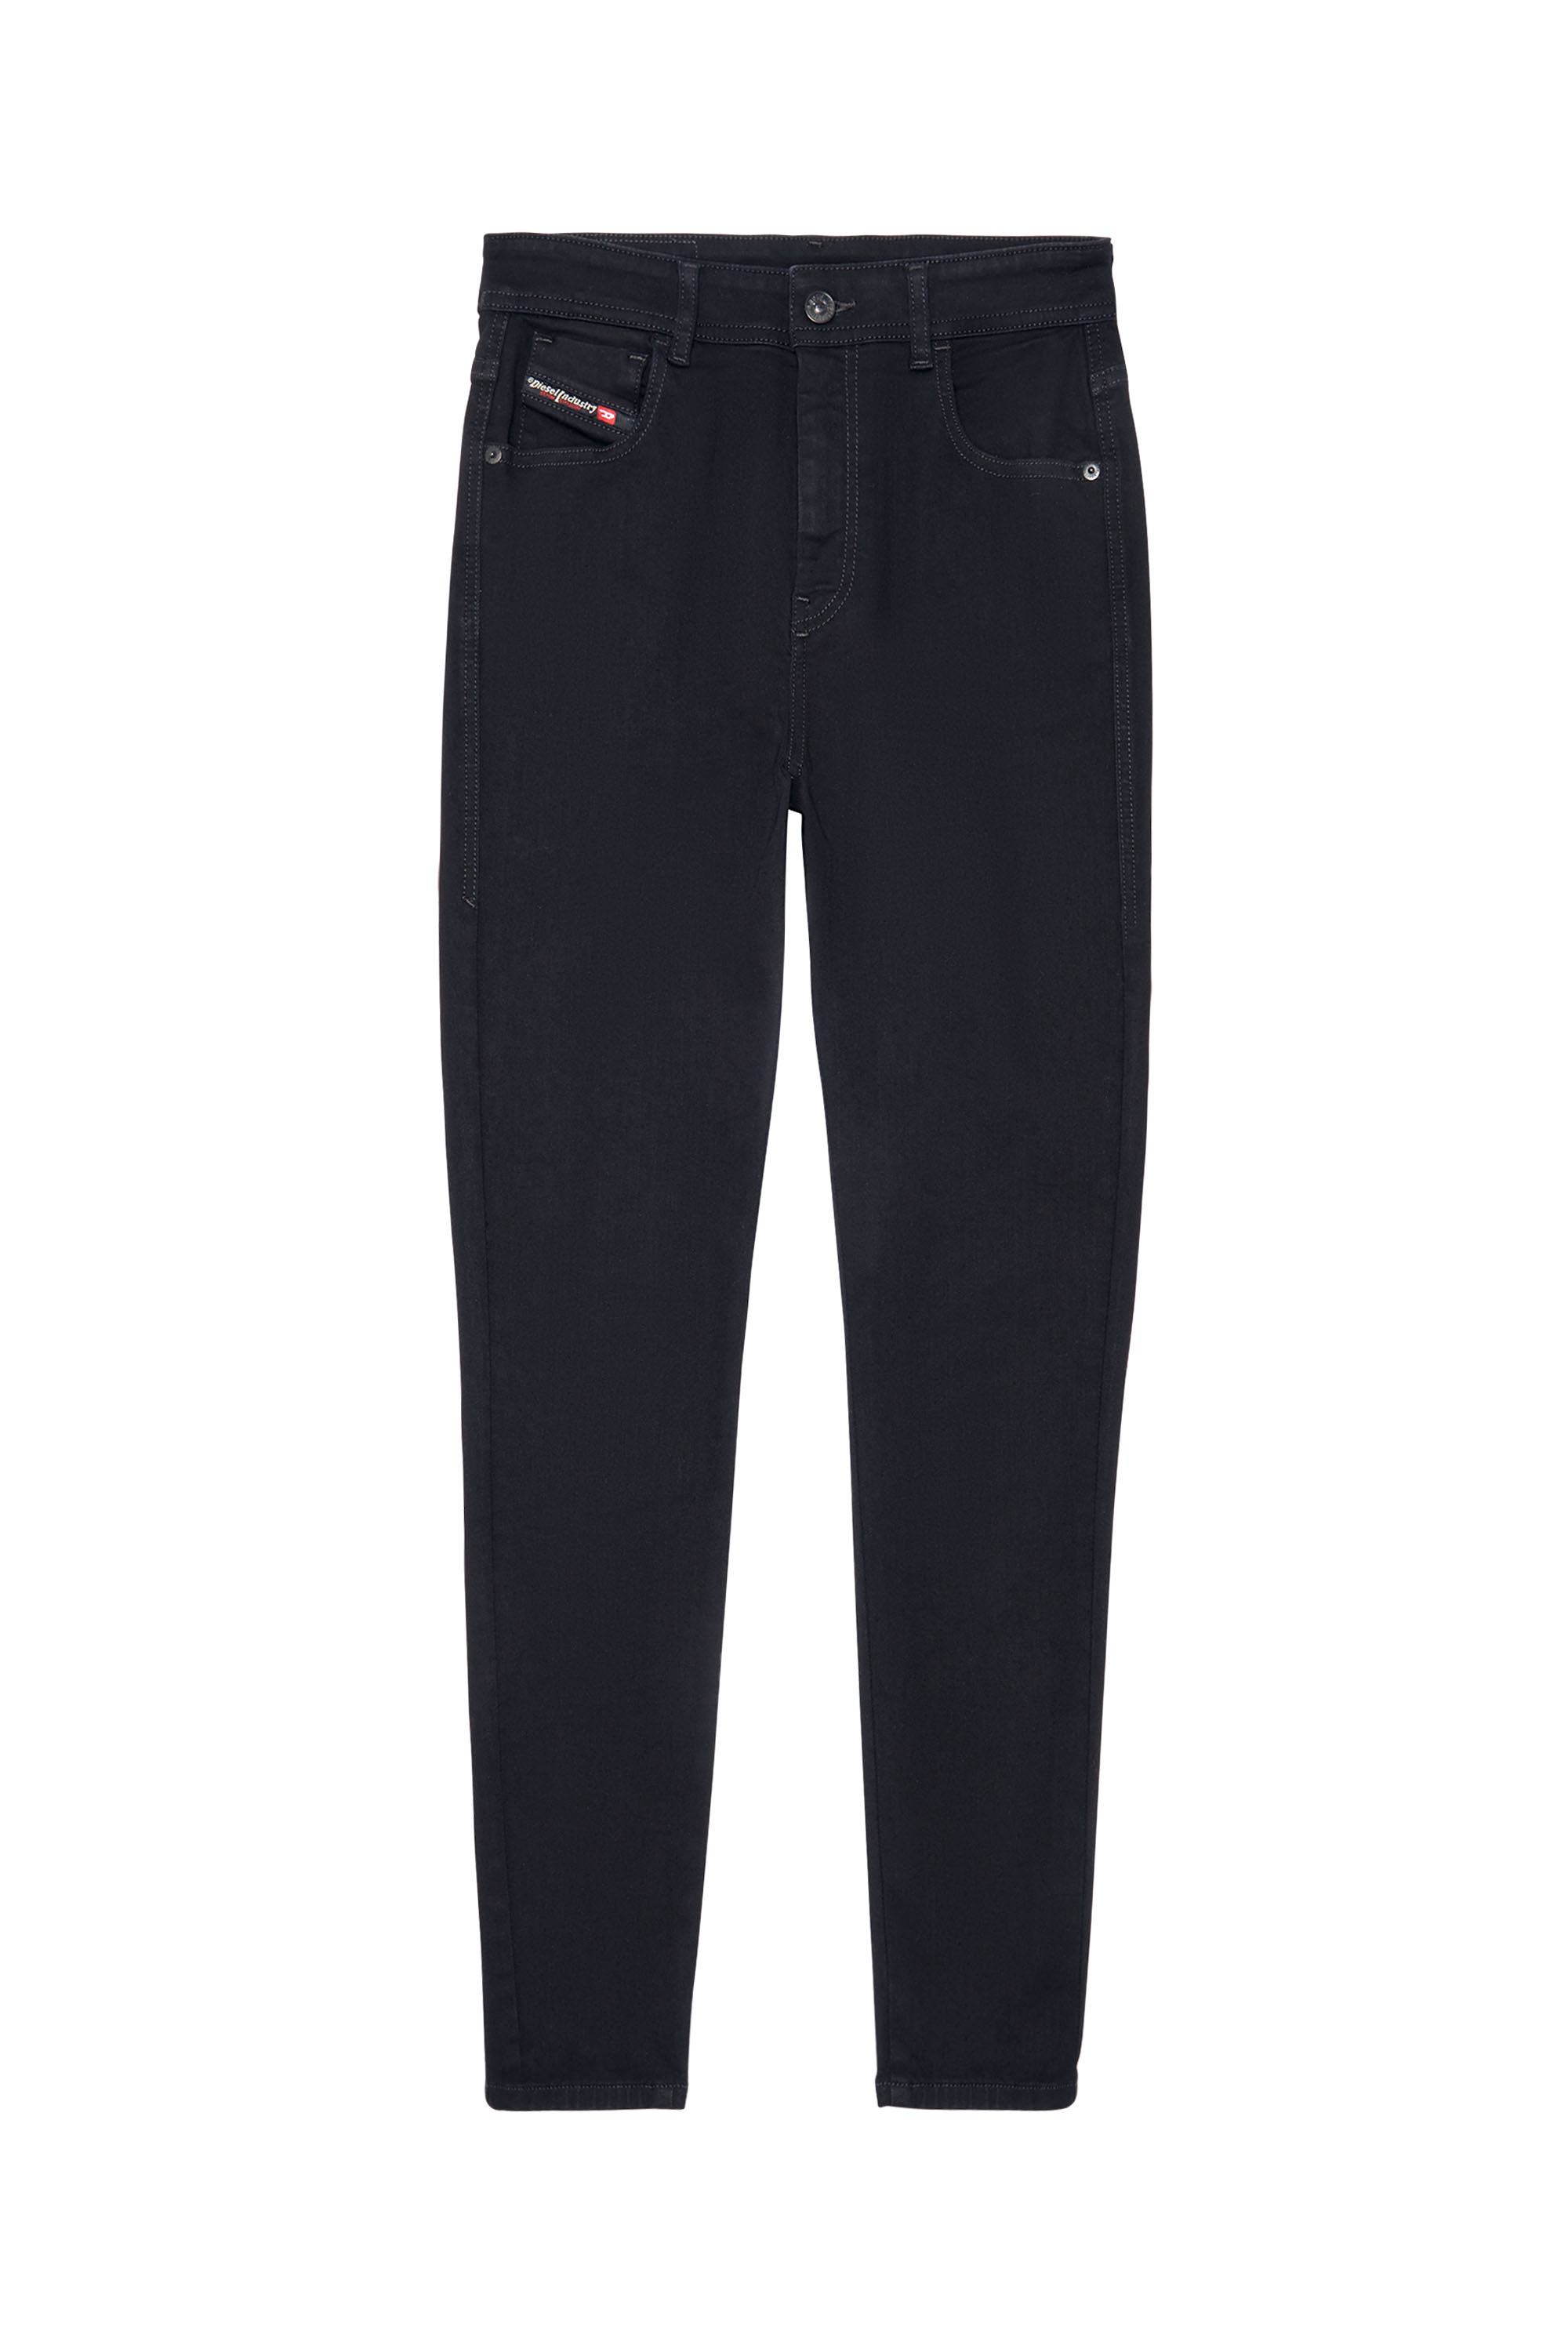 1984 Slandy-High 069EF Super skinny Jeans, Black/Dark grey